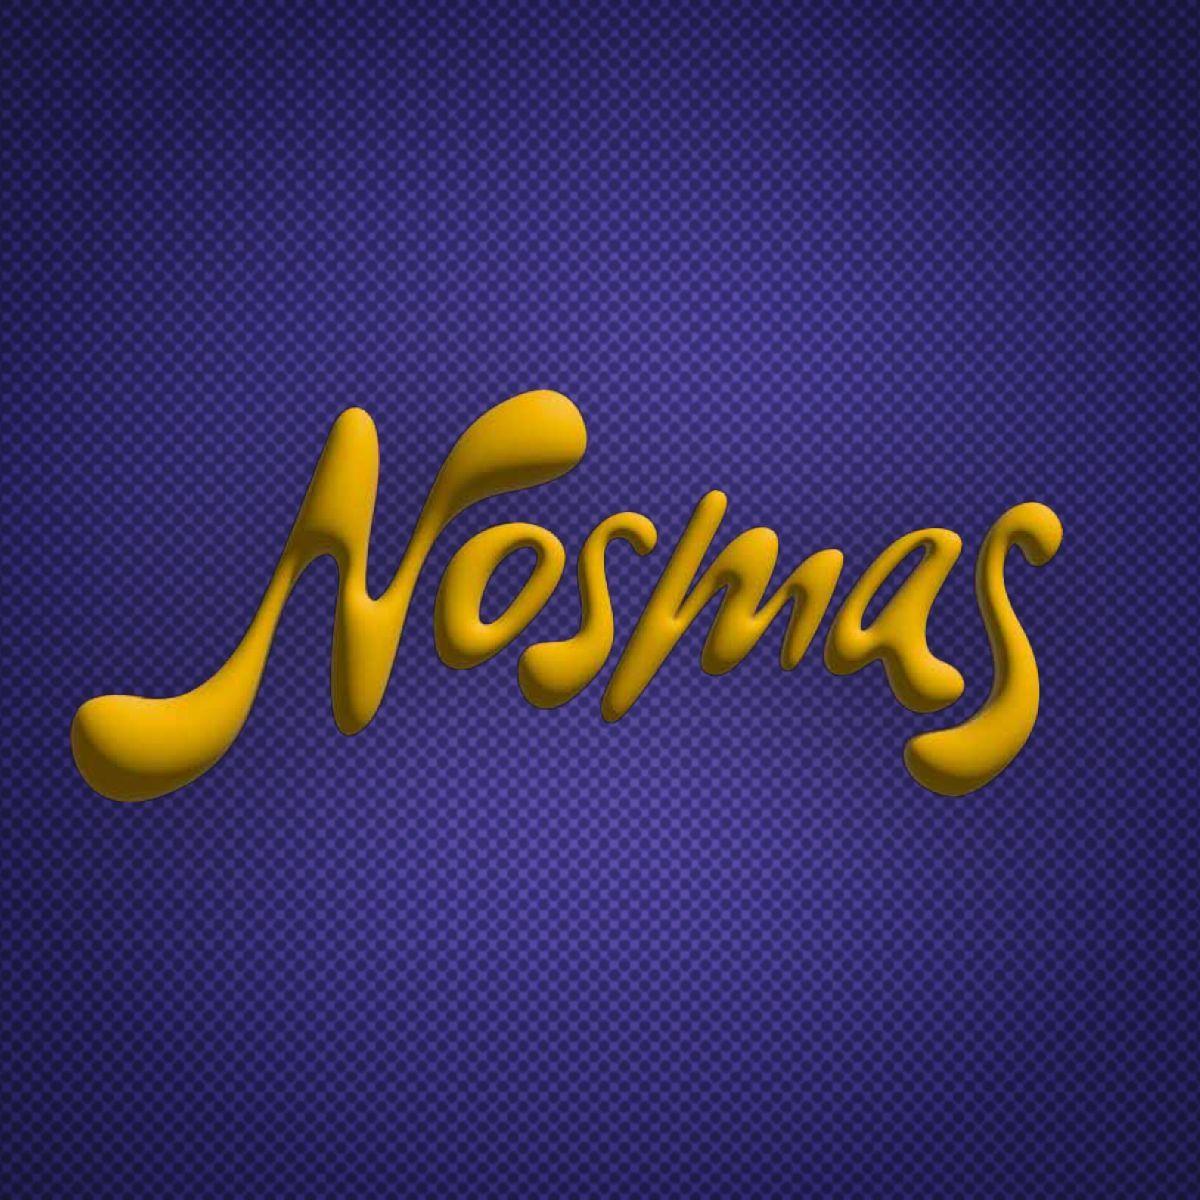 Player Nosmas_ avatar